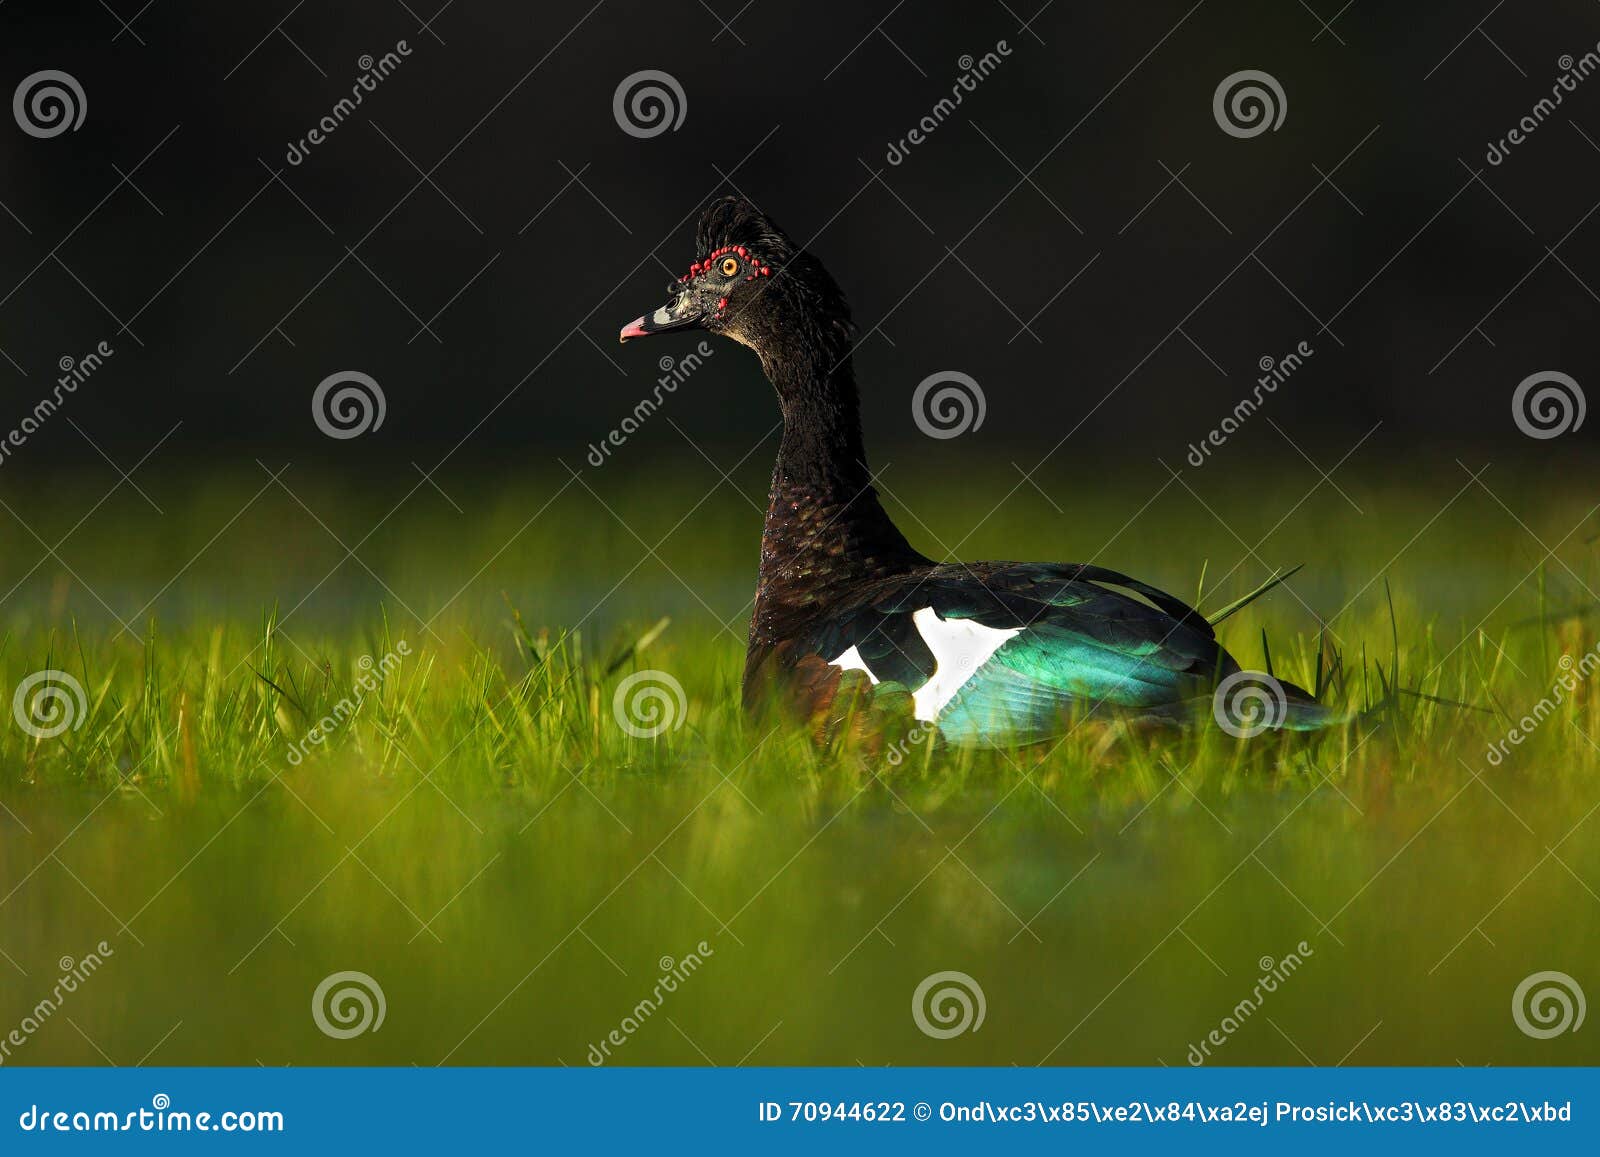 muscovy duck, cairina moschata, in the water green grass, bird in the nature habitat, barranco alto, pantanal, brazil